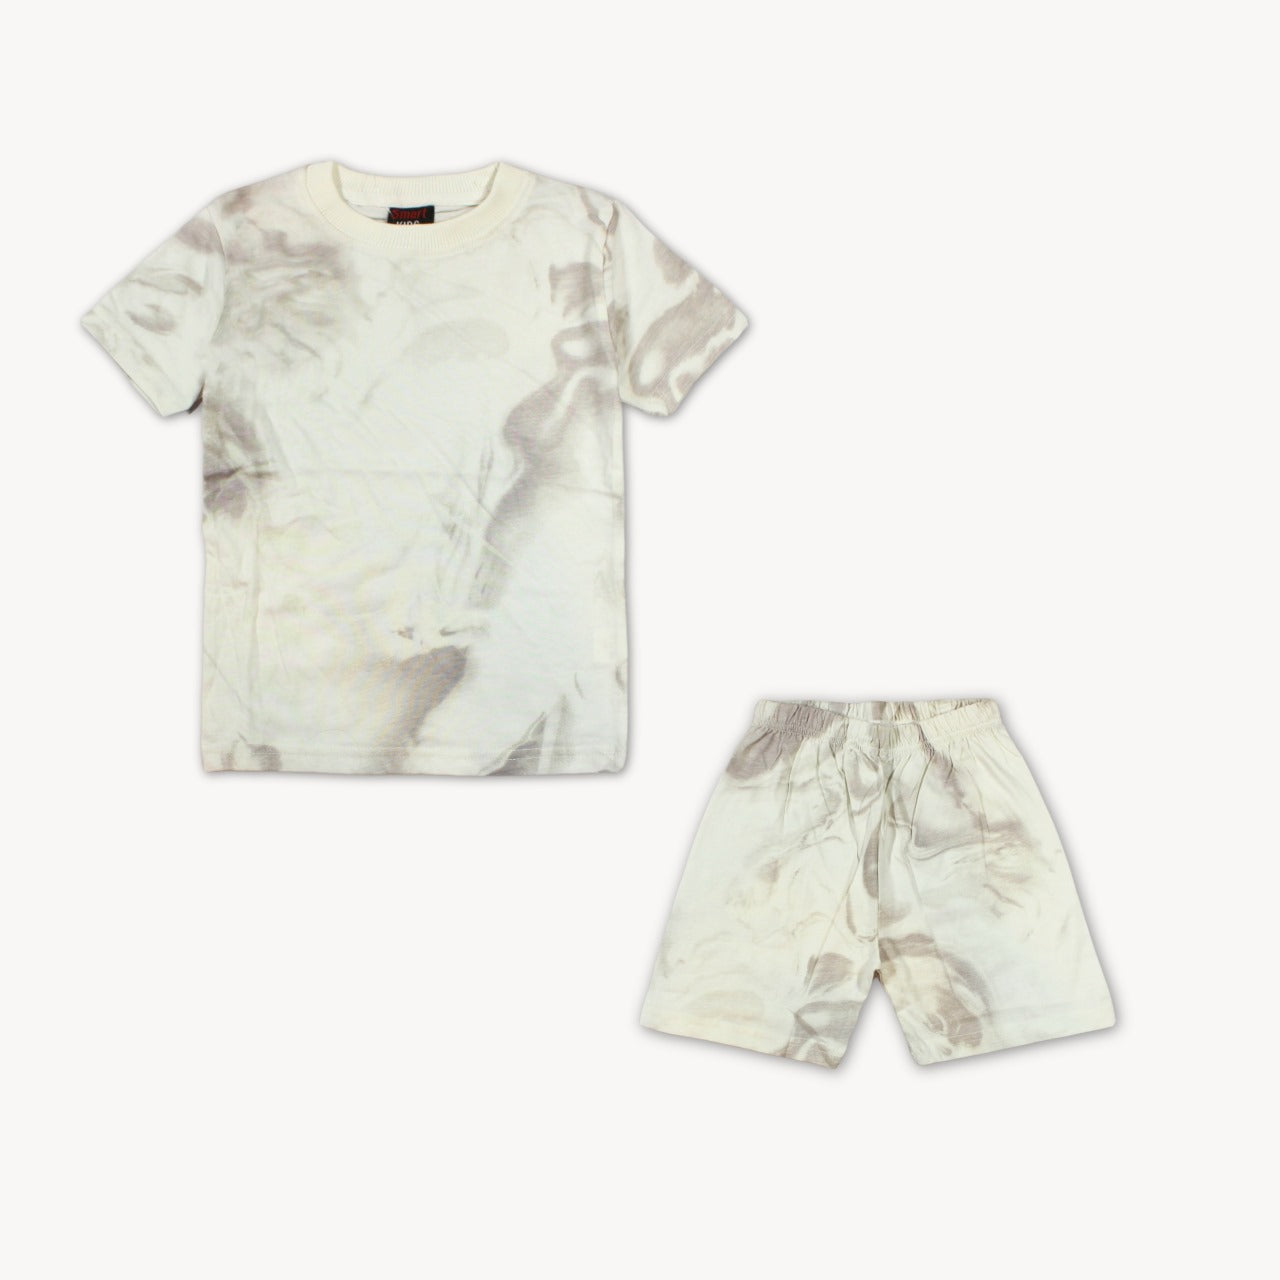 White & Brown Abstract Shirt & Short Set